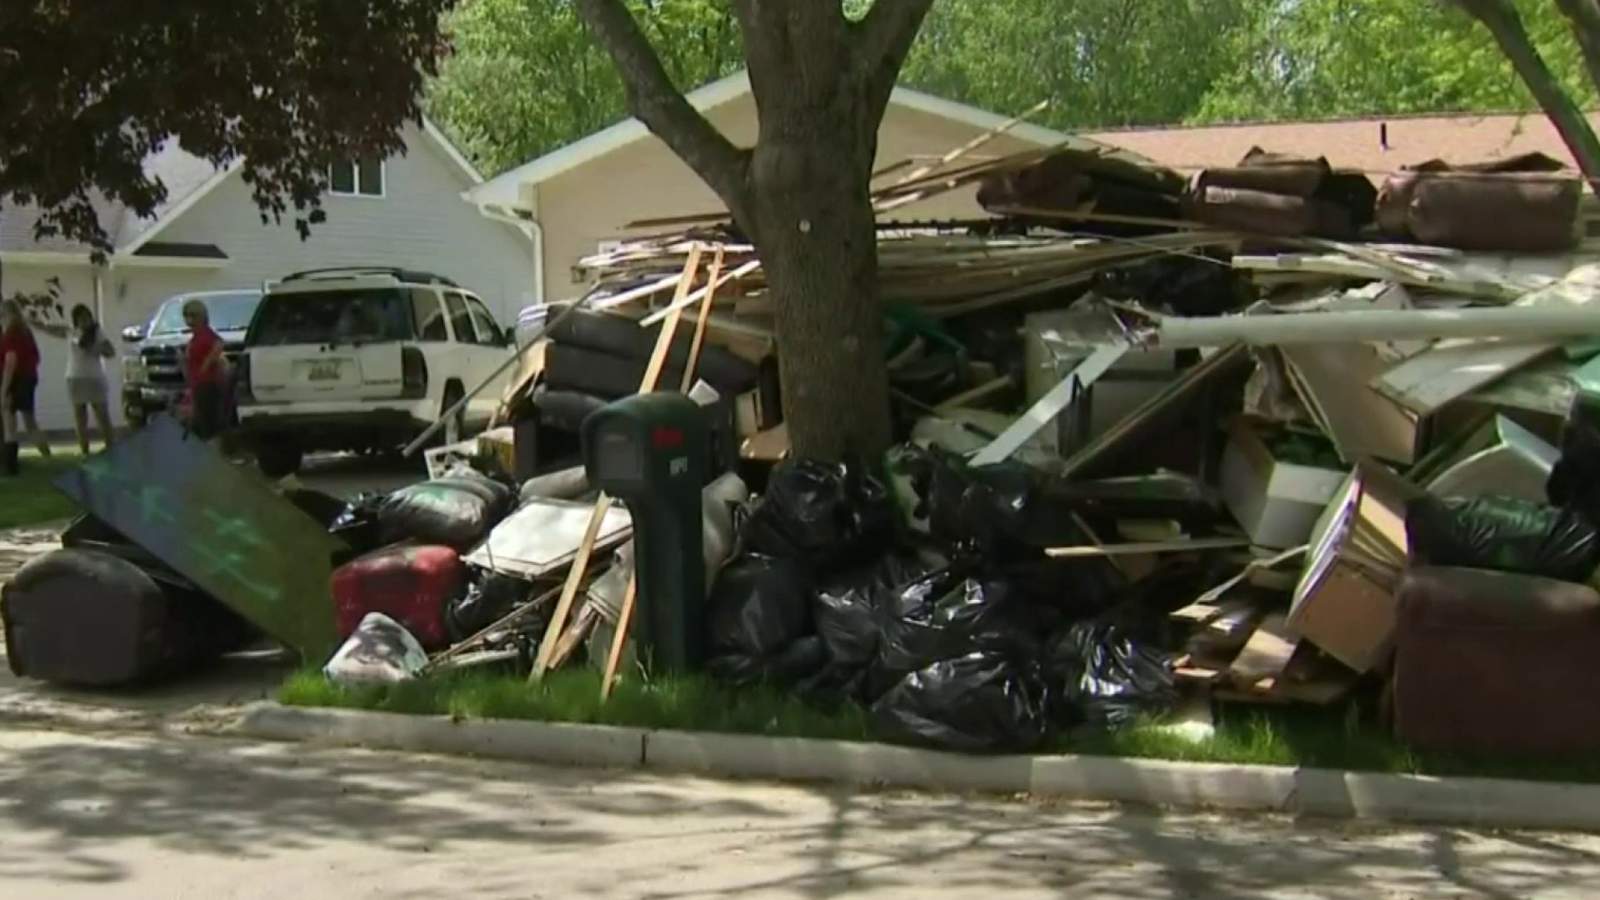 Debris line neighborhoods in mid-Michigan as community deals with damage from devastating floods